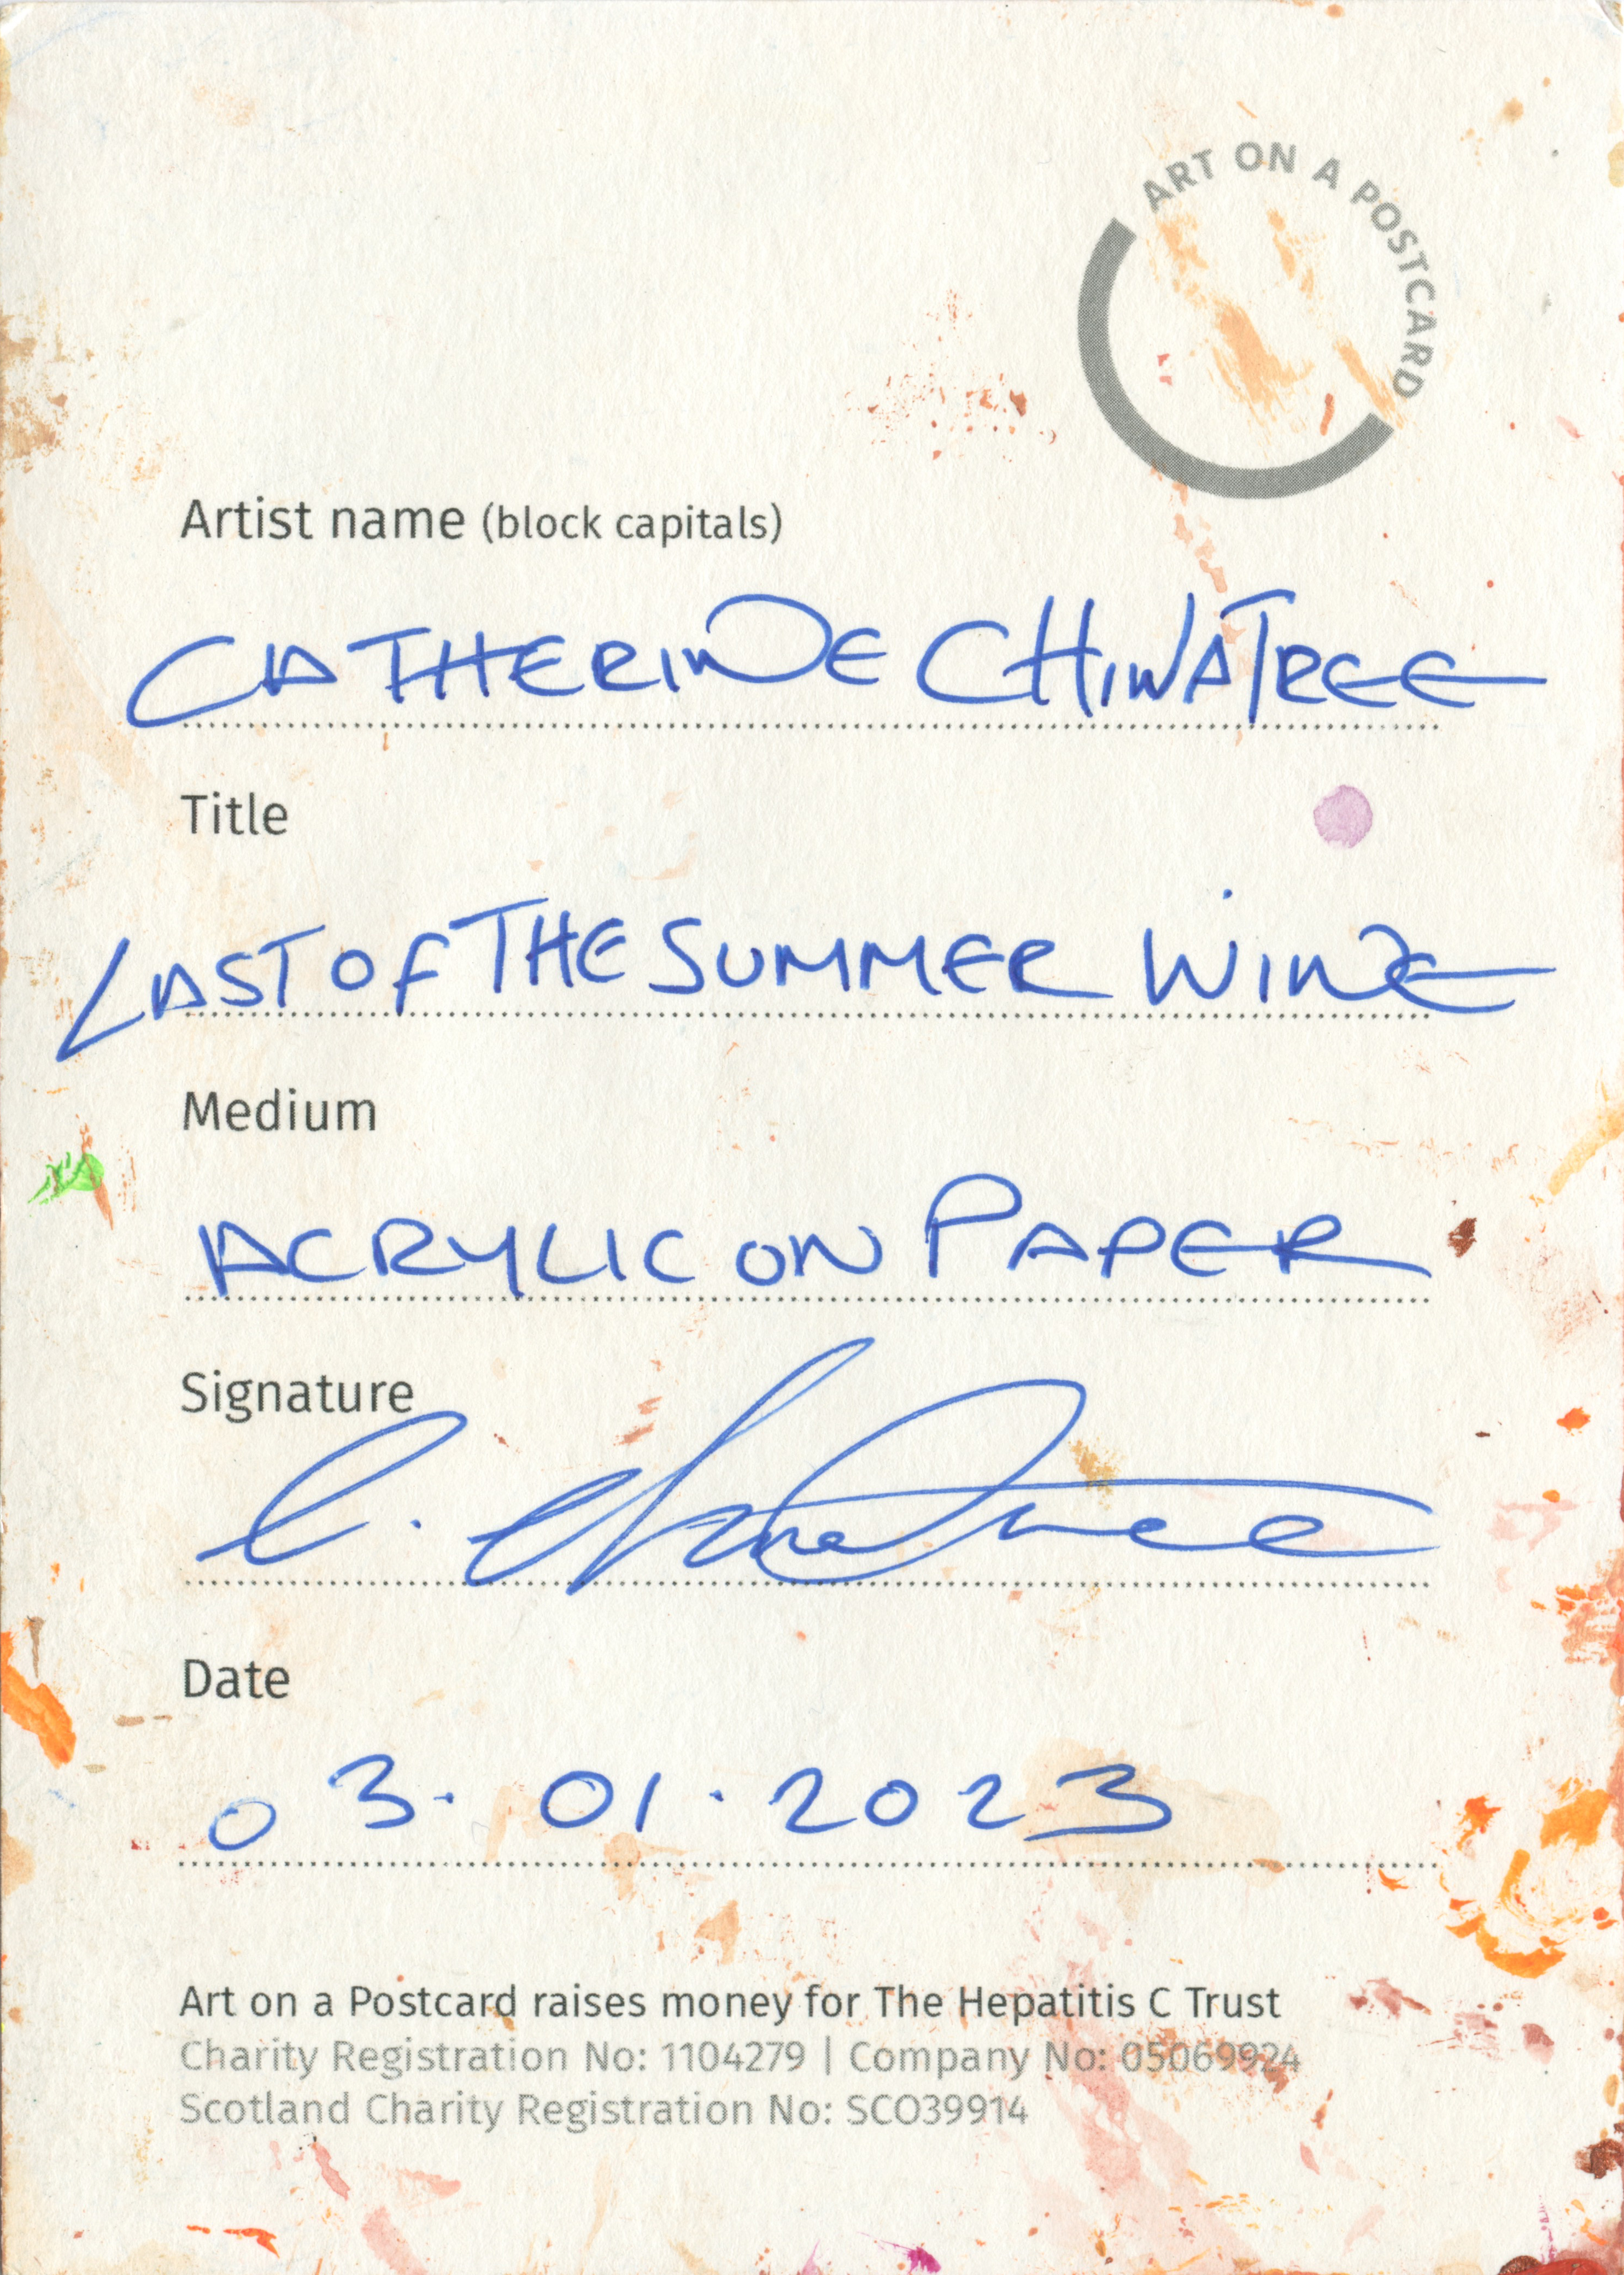 cc summer wine 